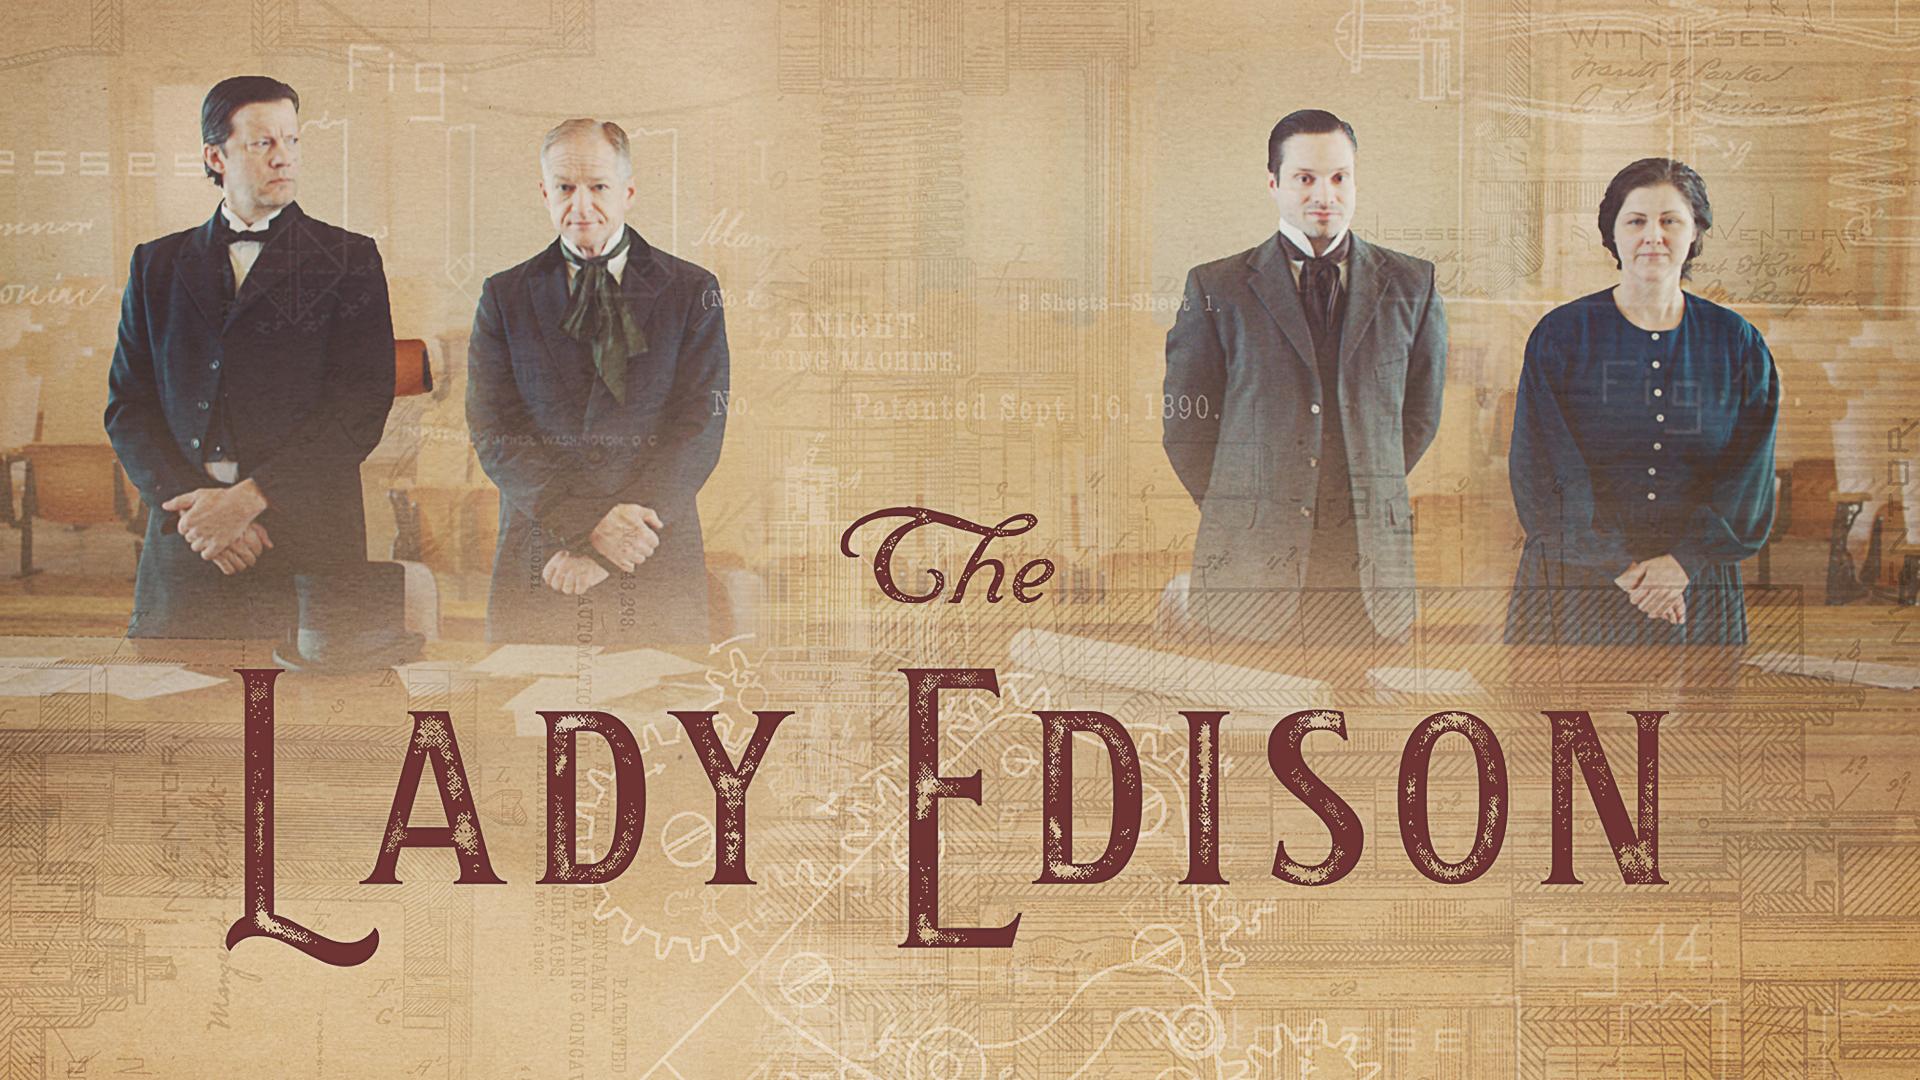 The Lady Edison